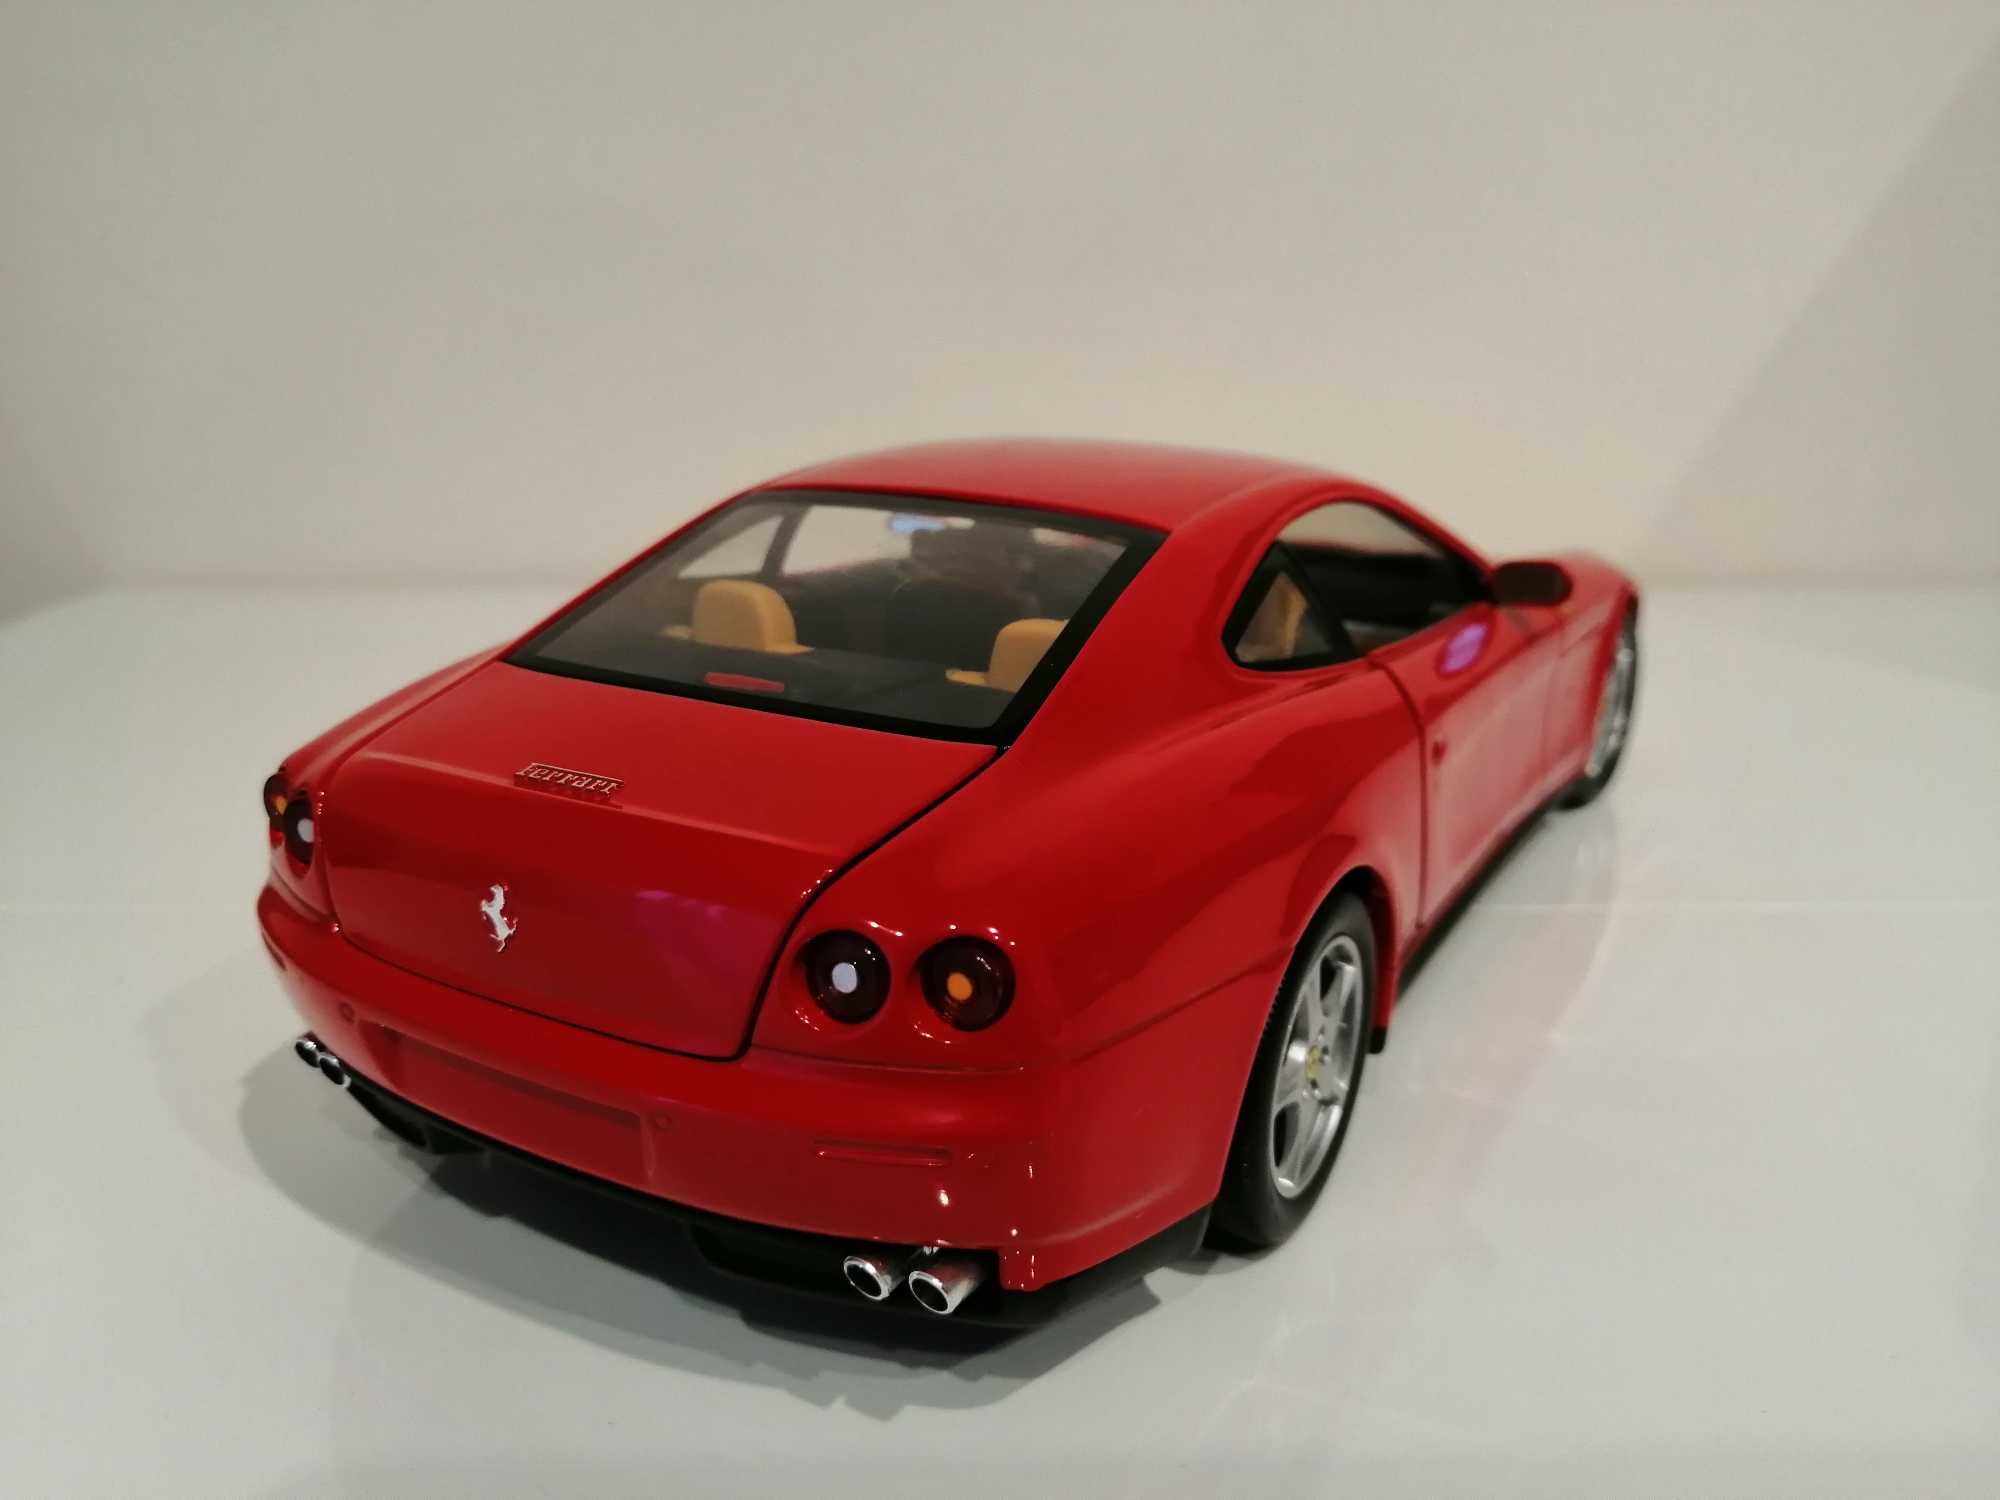 Ferrari 612 Scaglietti, Hotwheels 1:18